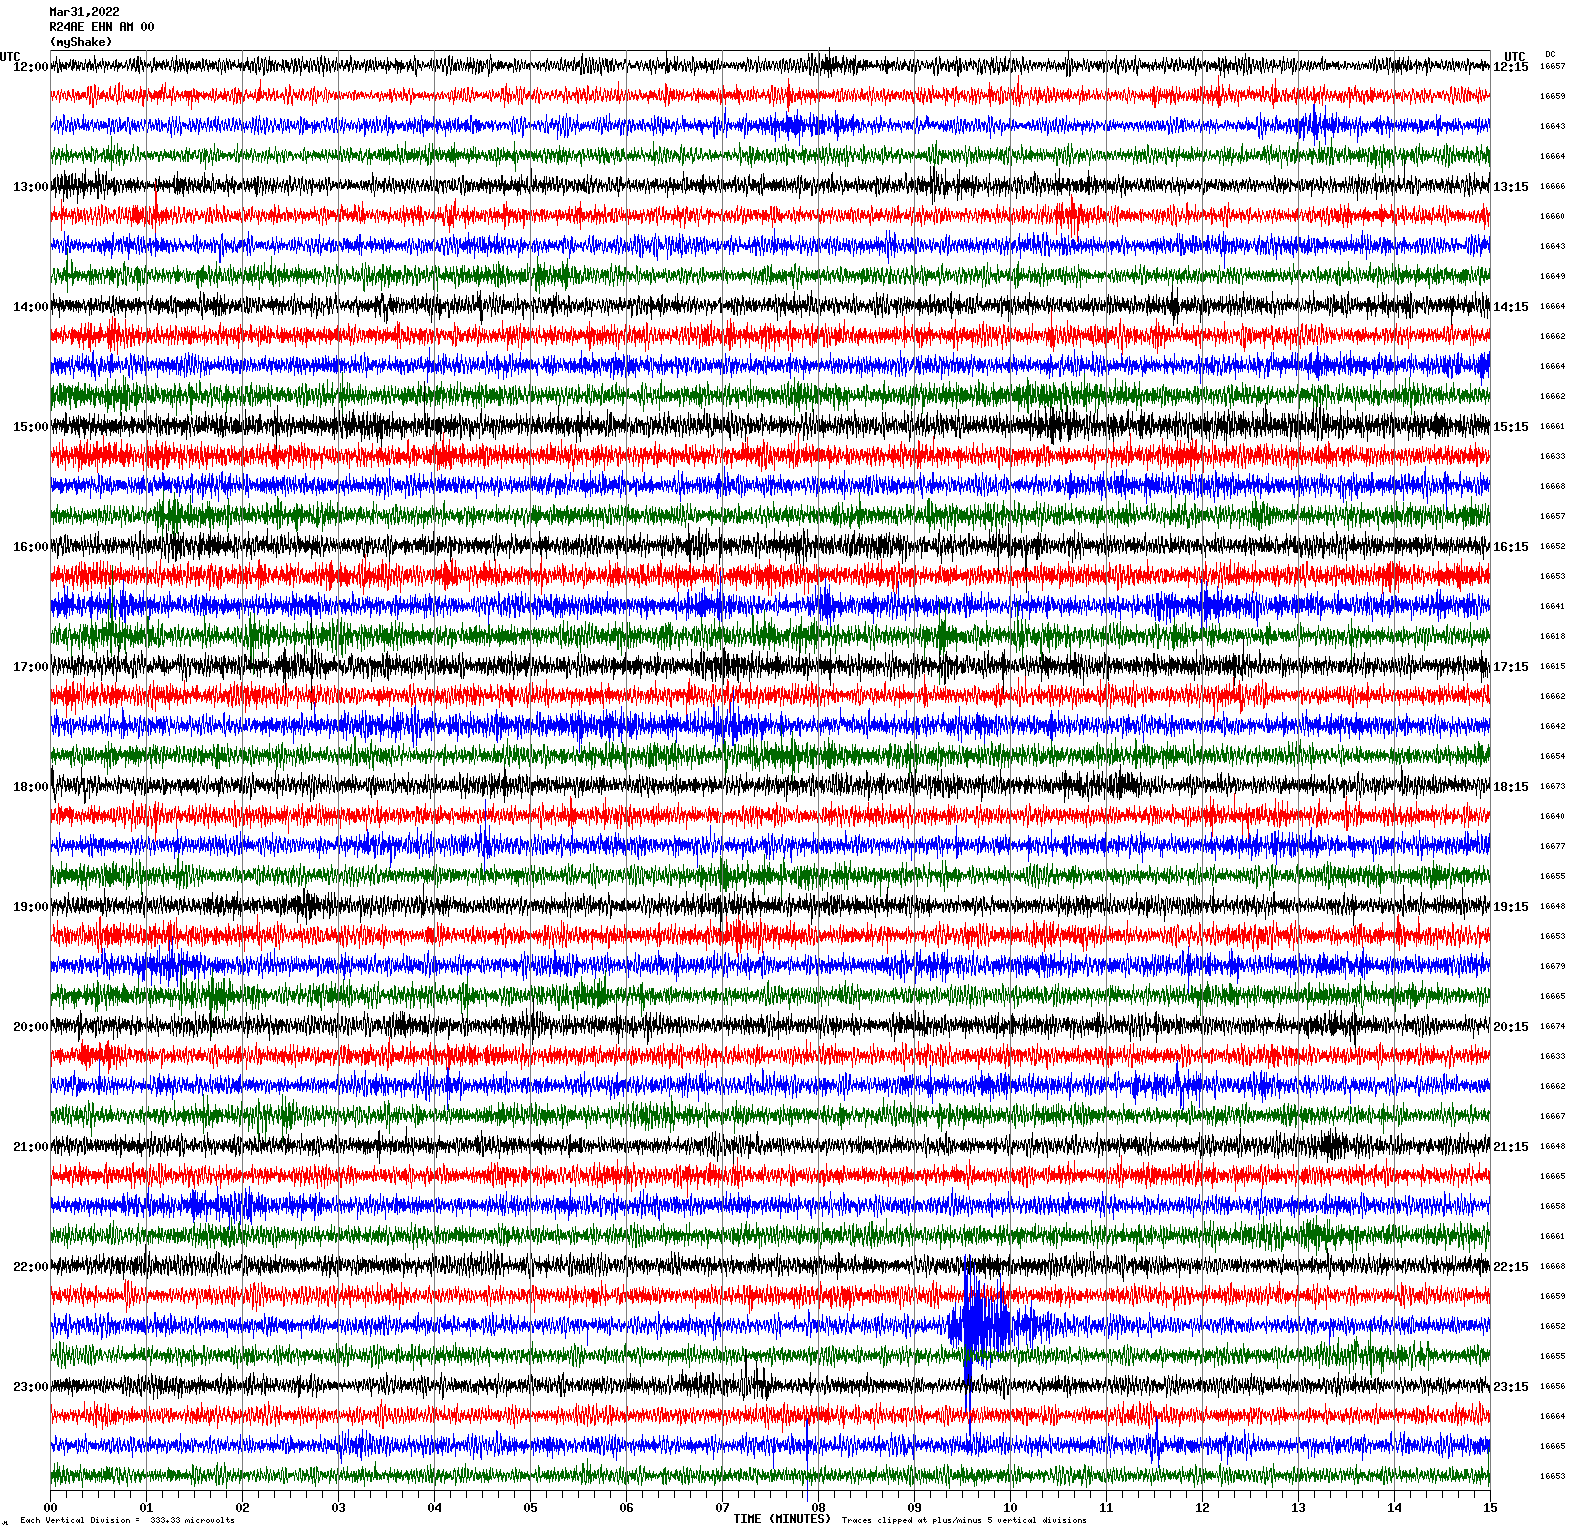 /seismic-data/R24AE/R24AE_EHN_AM_00.2022033112.gif